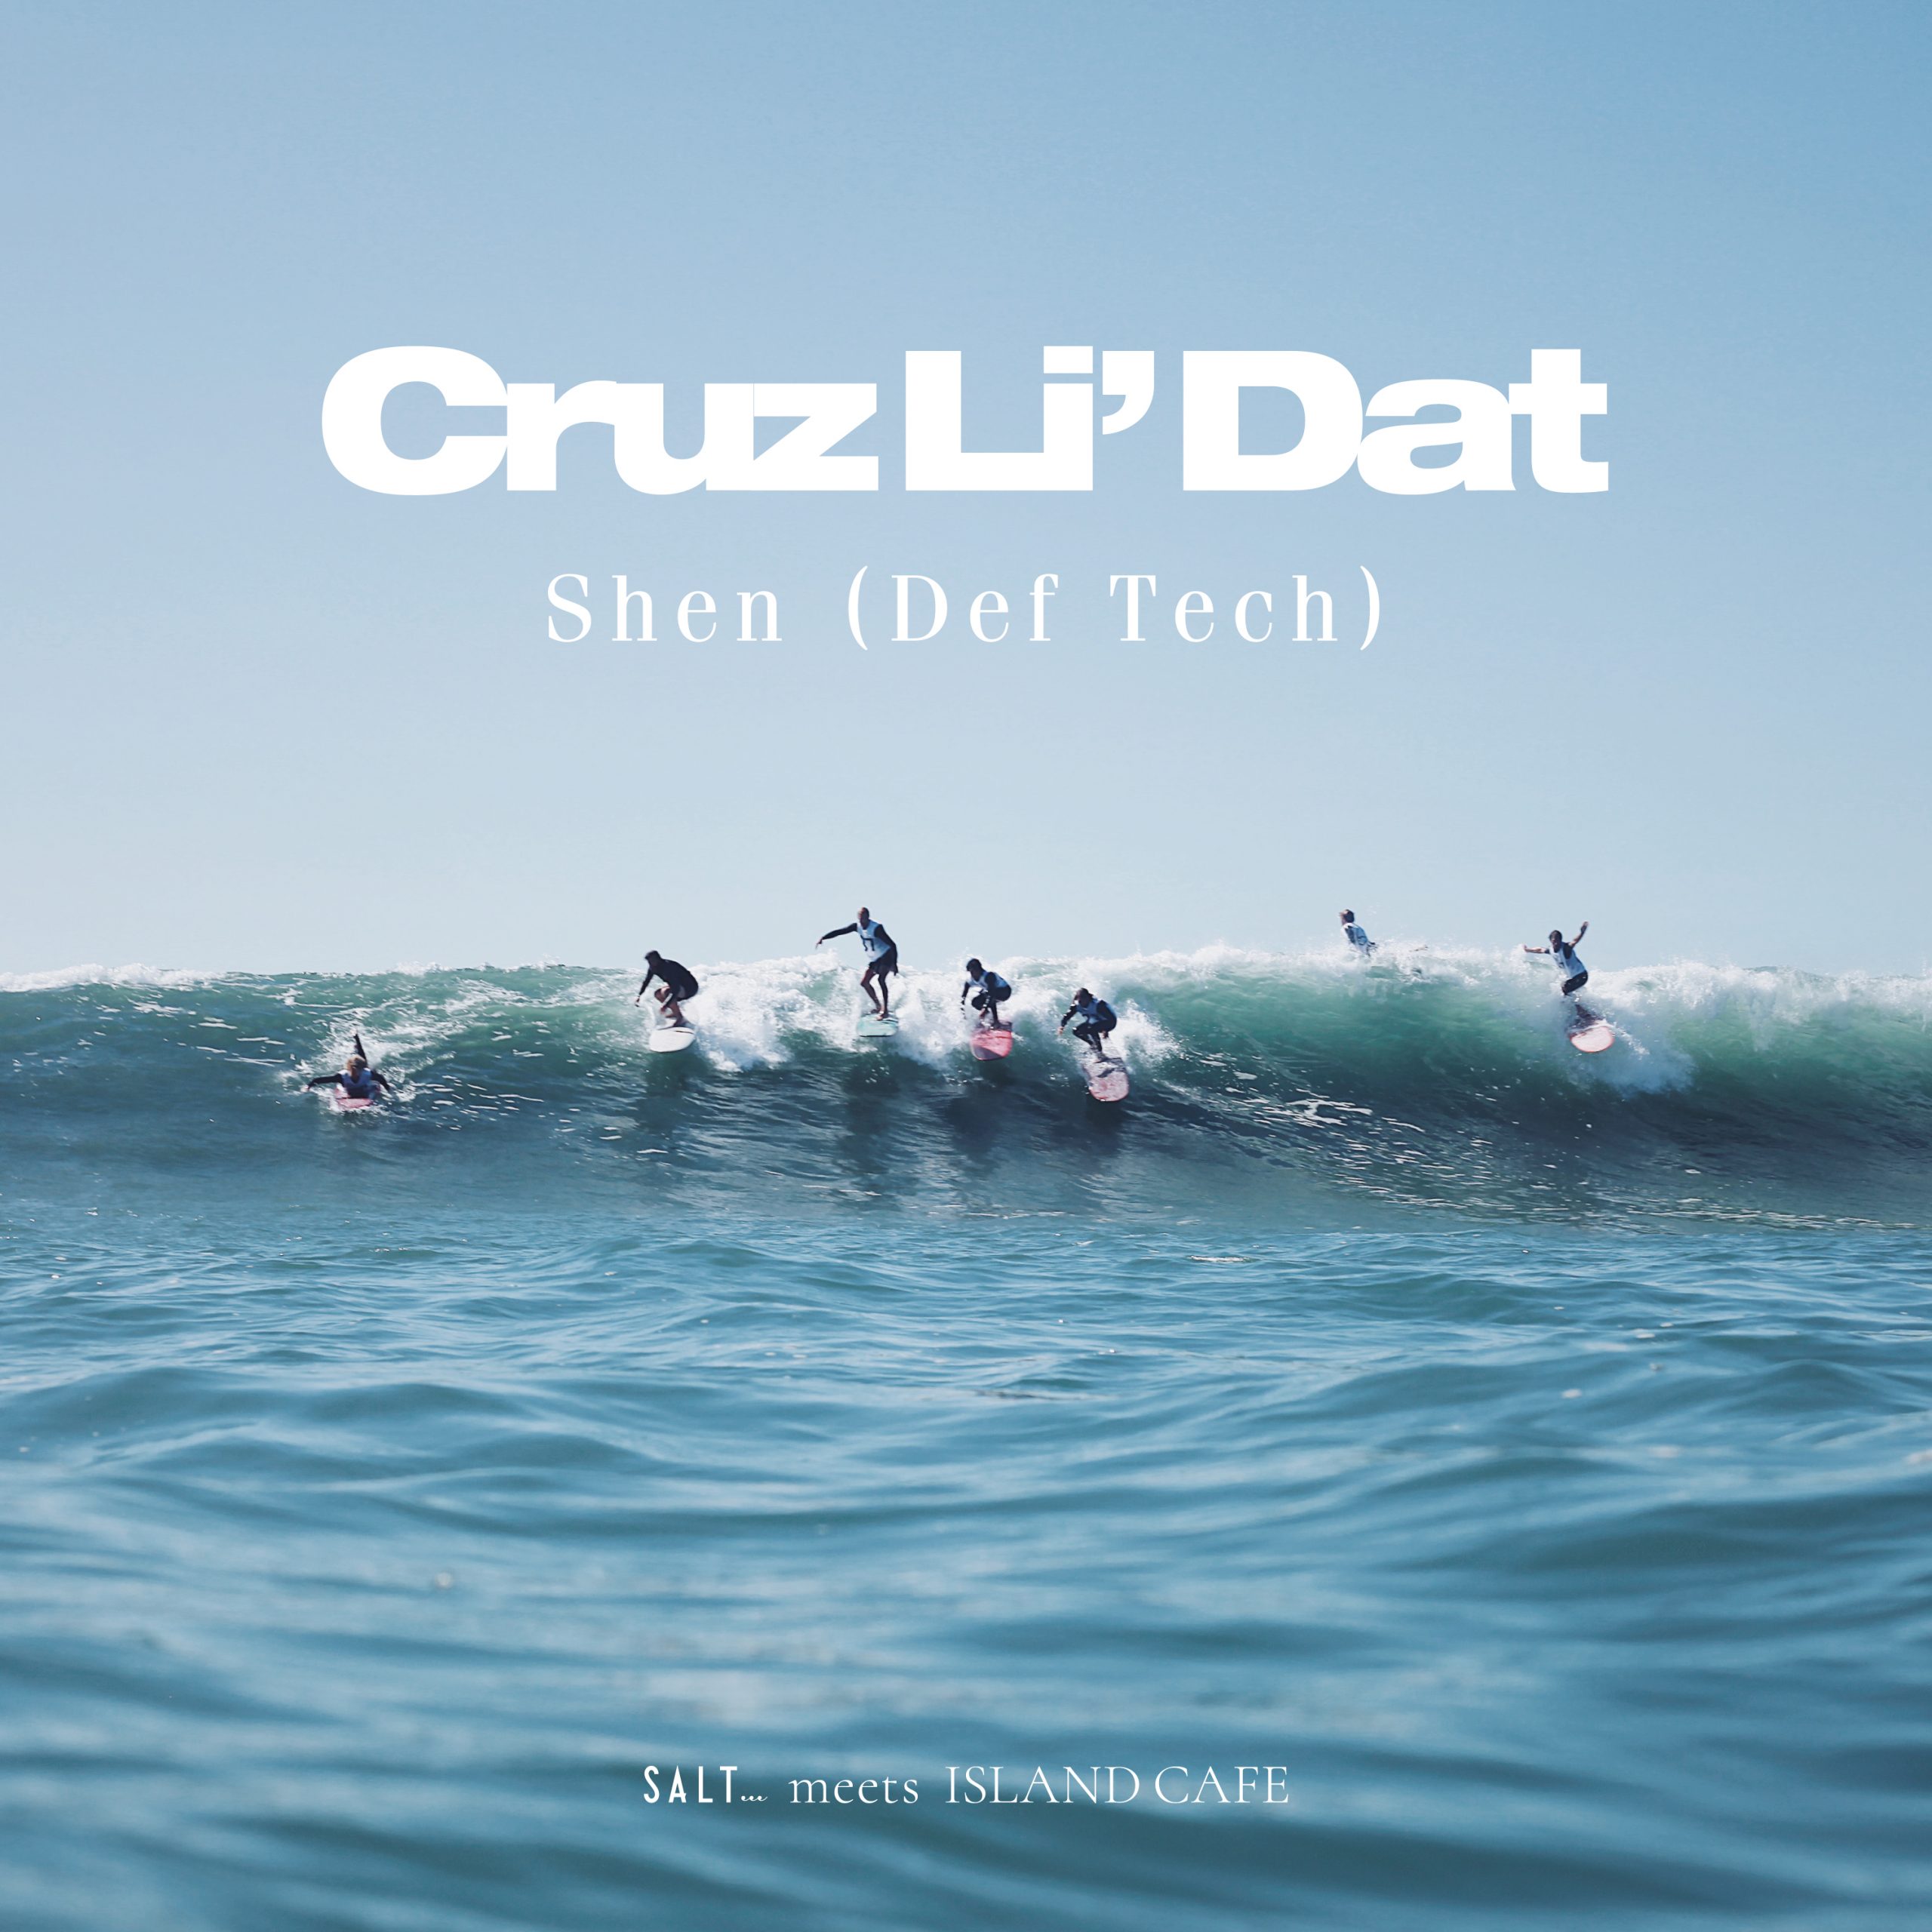 “Shen (Def Tech)”のソロ・ニューシングル「Cruz Li’ Dat」が 5月15日（水）に配信スタート！